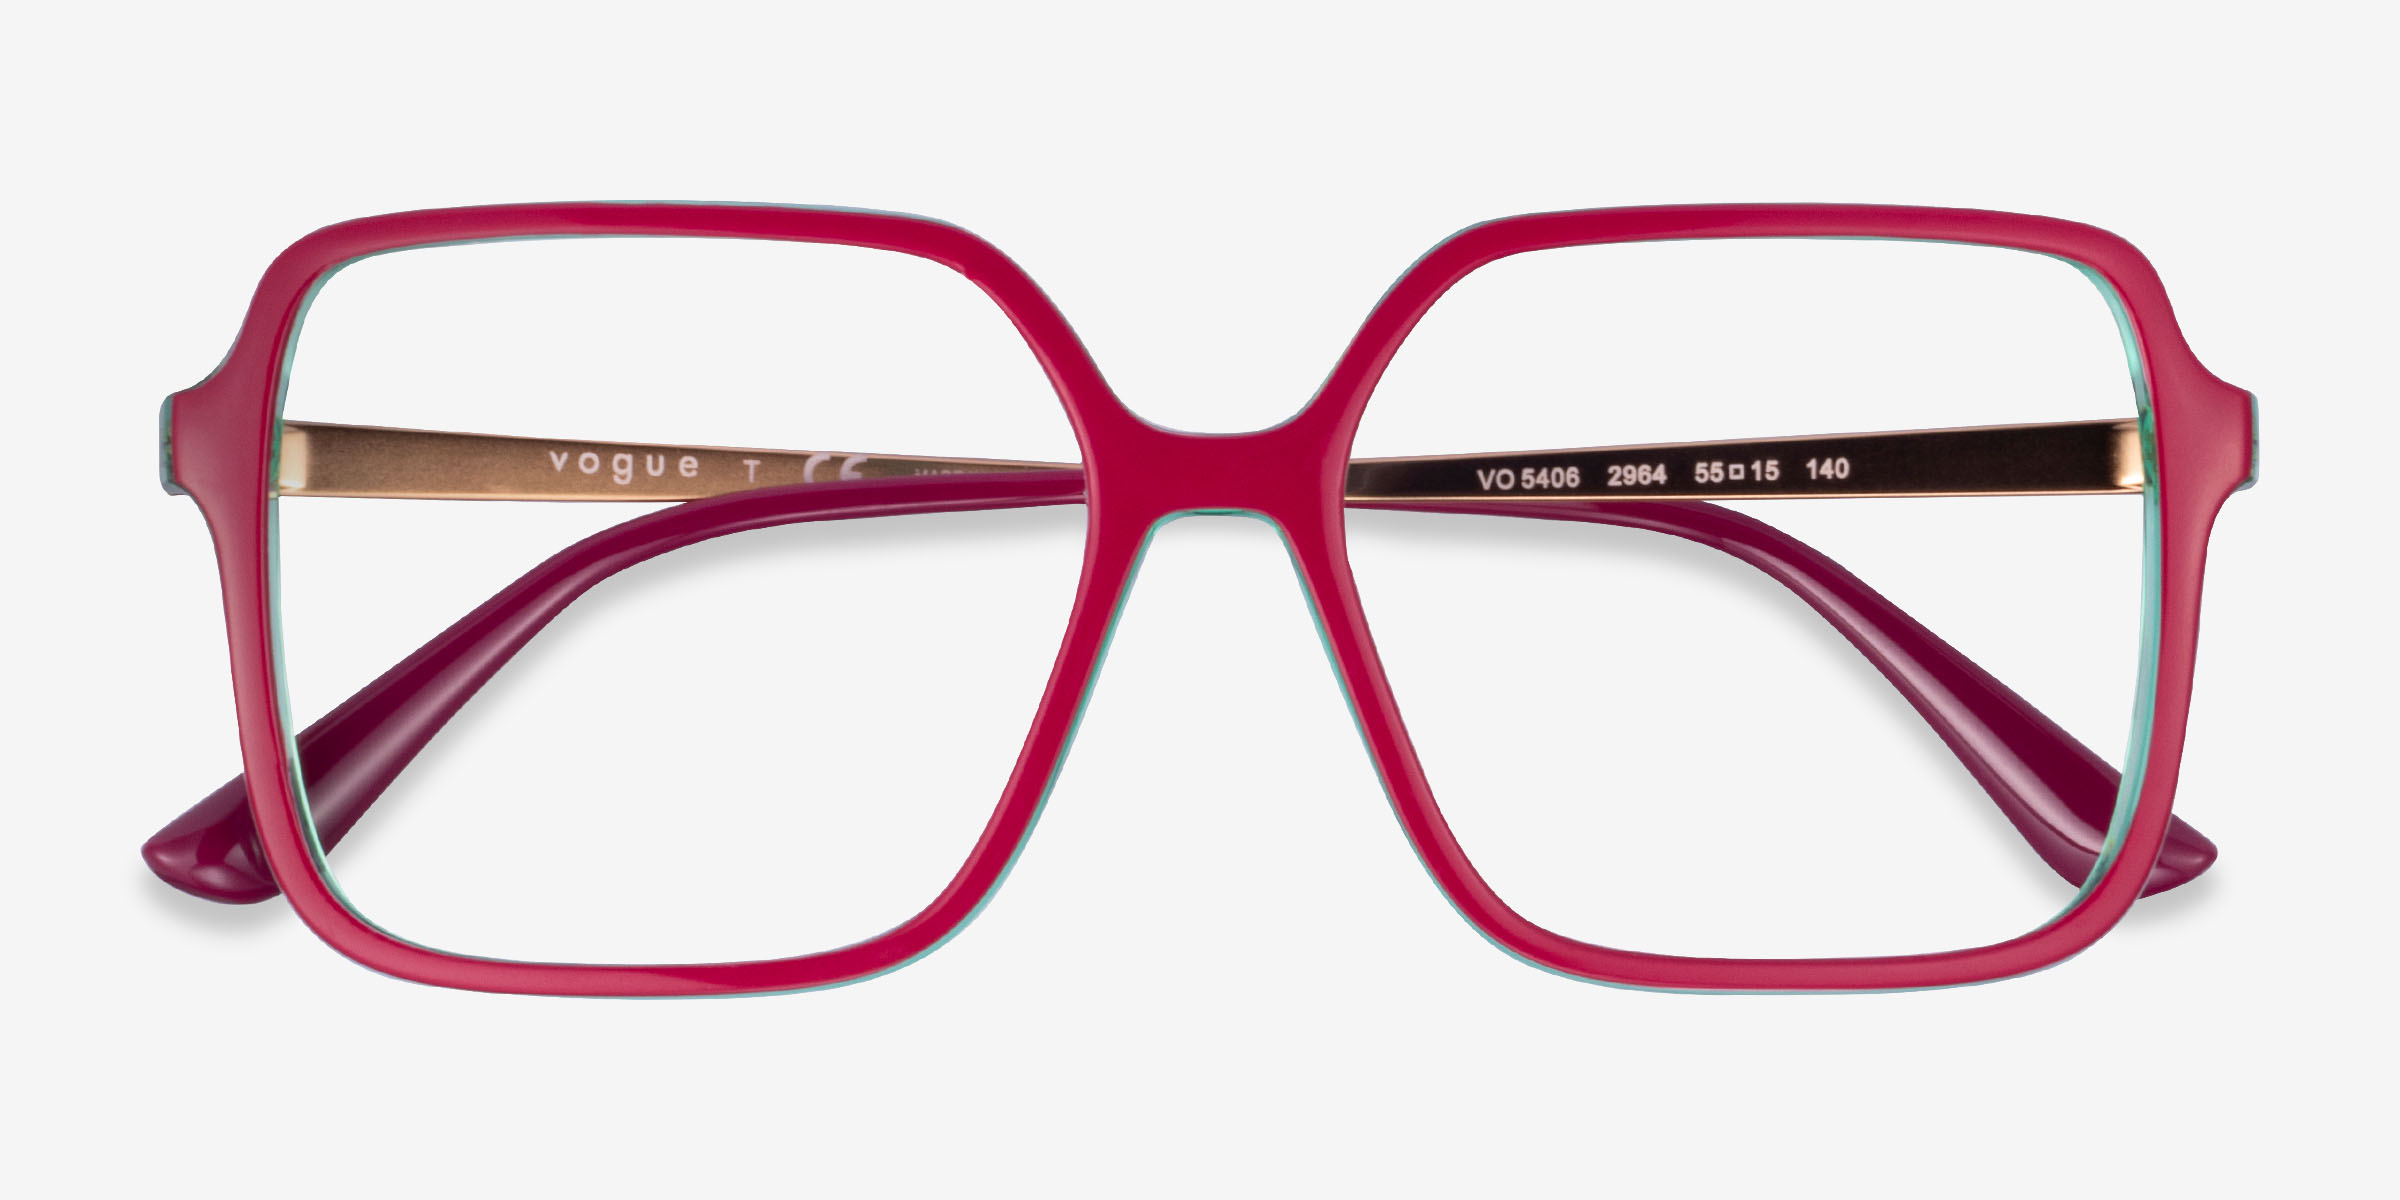 Vogue Eyewear Vo5406 Square Red Green Frame Glasses For Women Eyebuydirect